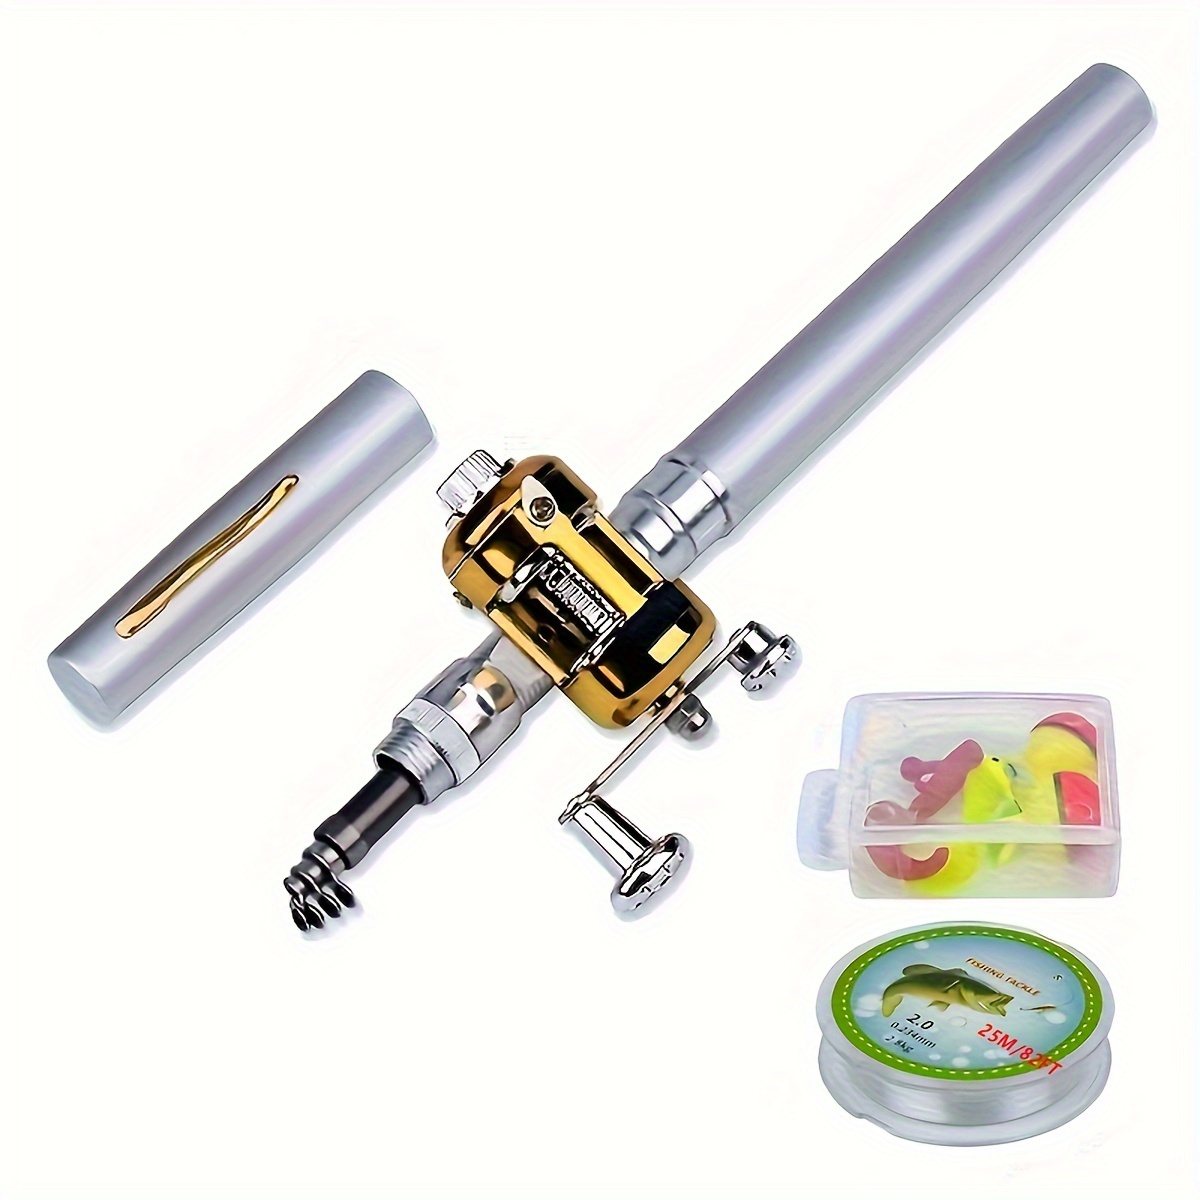 Pocket Size Fishing Rod - Telescopic Pen Fishing Pole And Reel